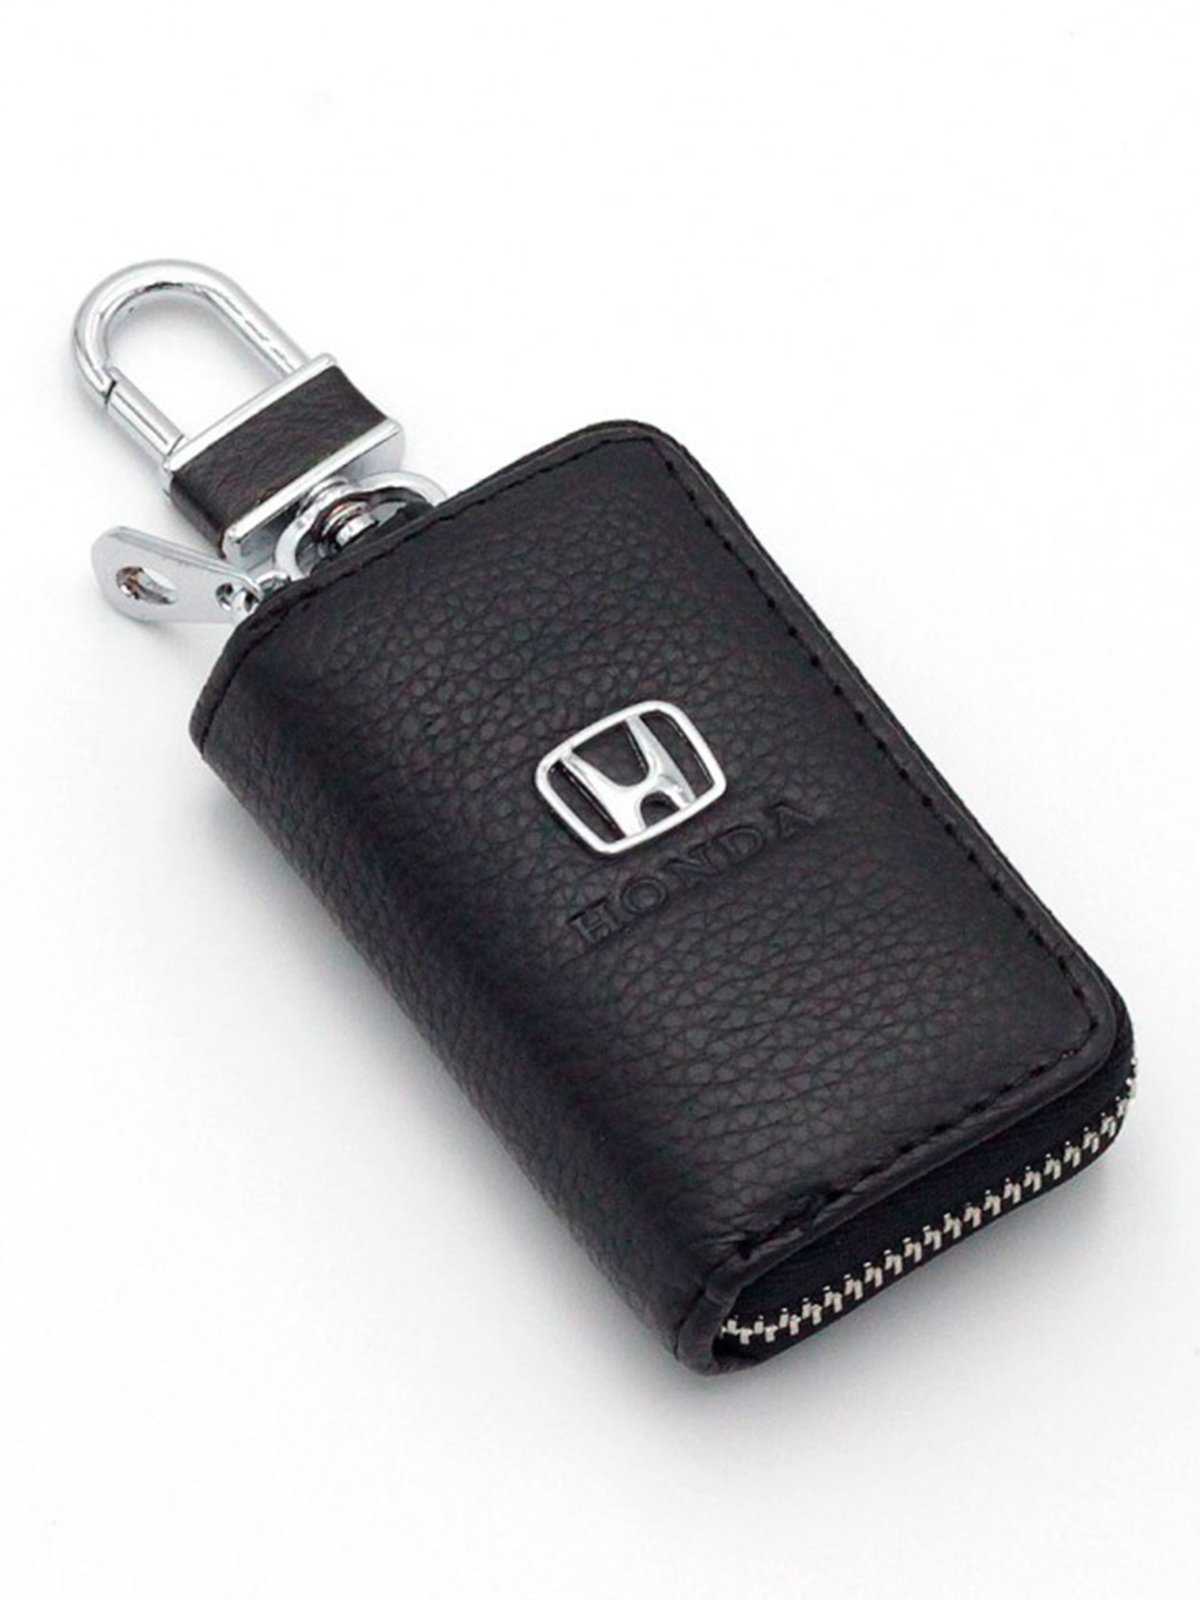 Ключница унисекс JINN avto/Honda черная(avto/Honda)